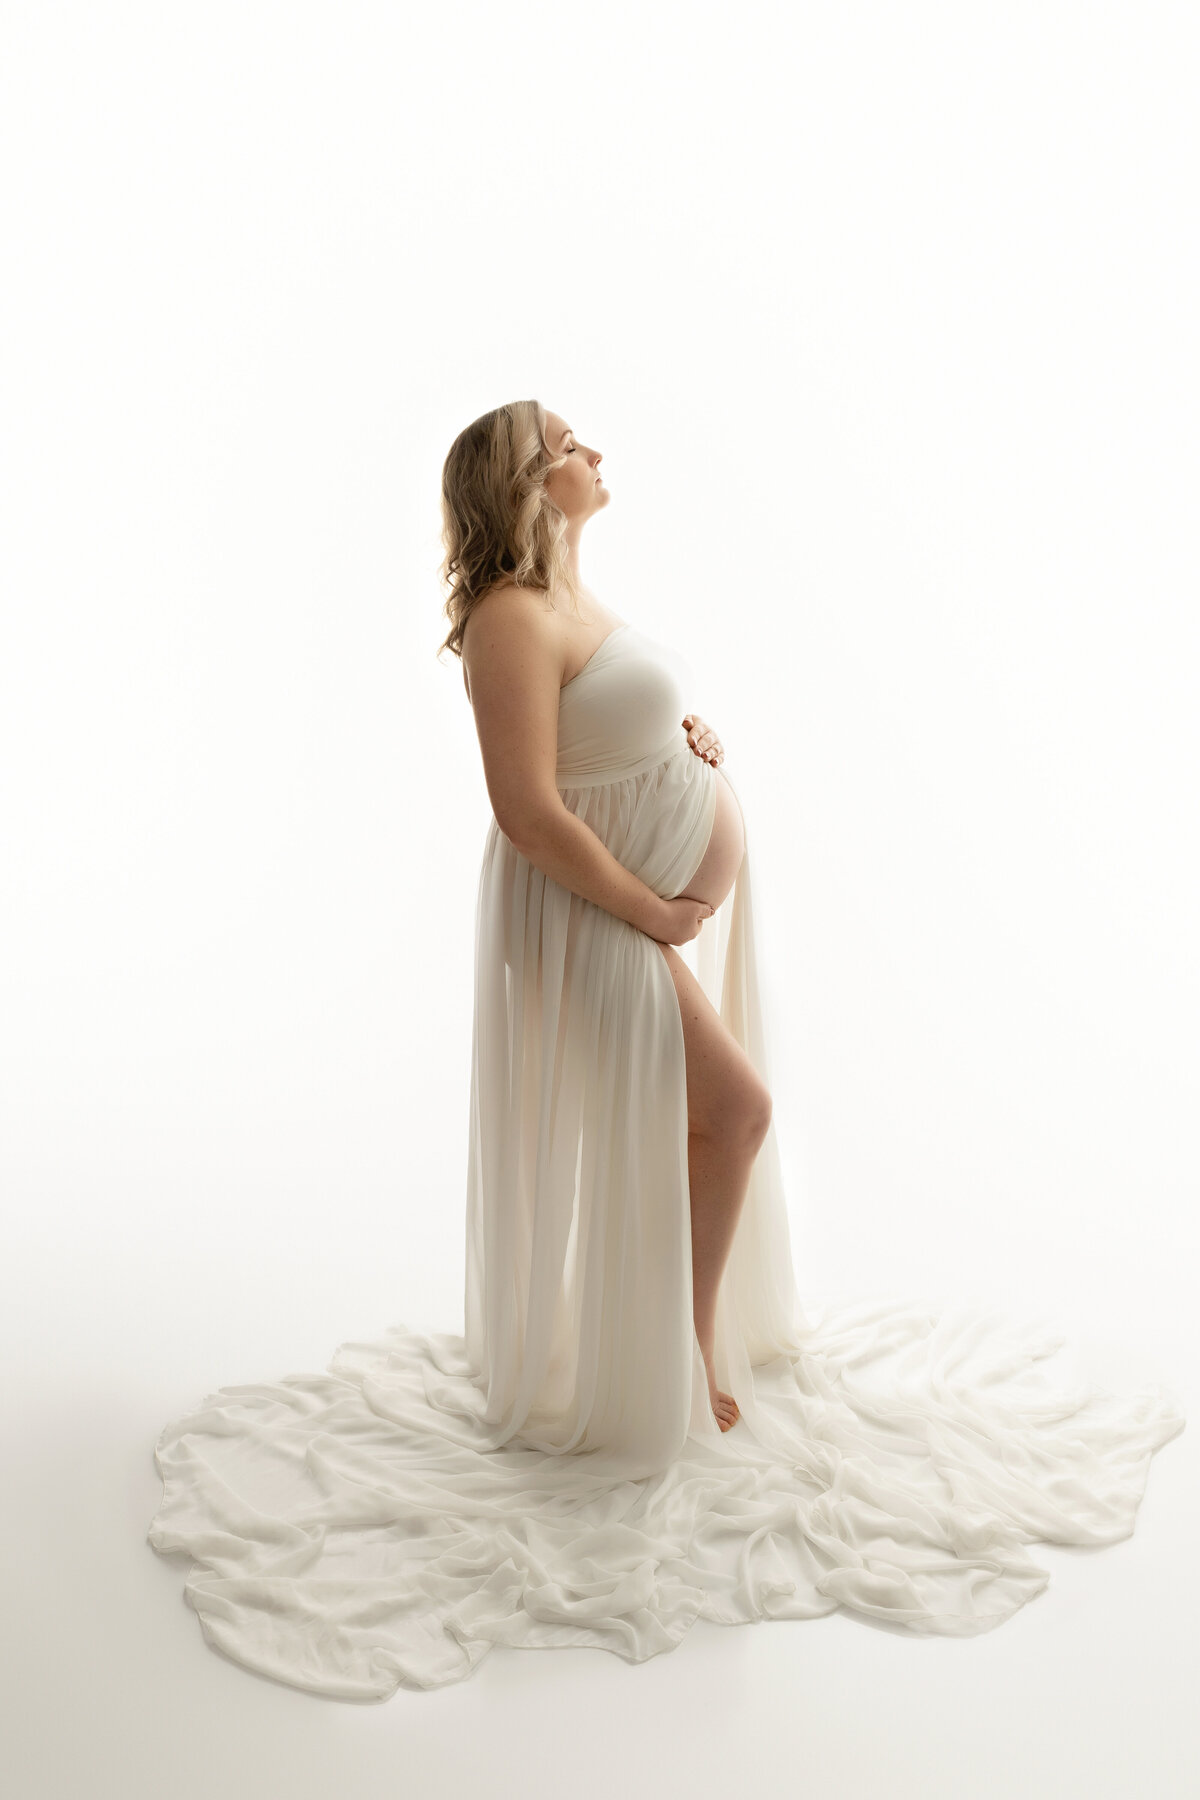 NJ-maternity-photographer-9